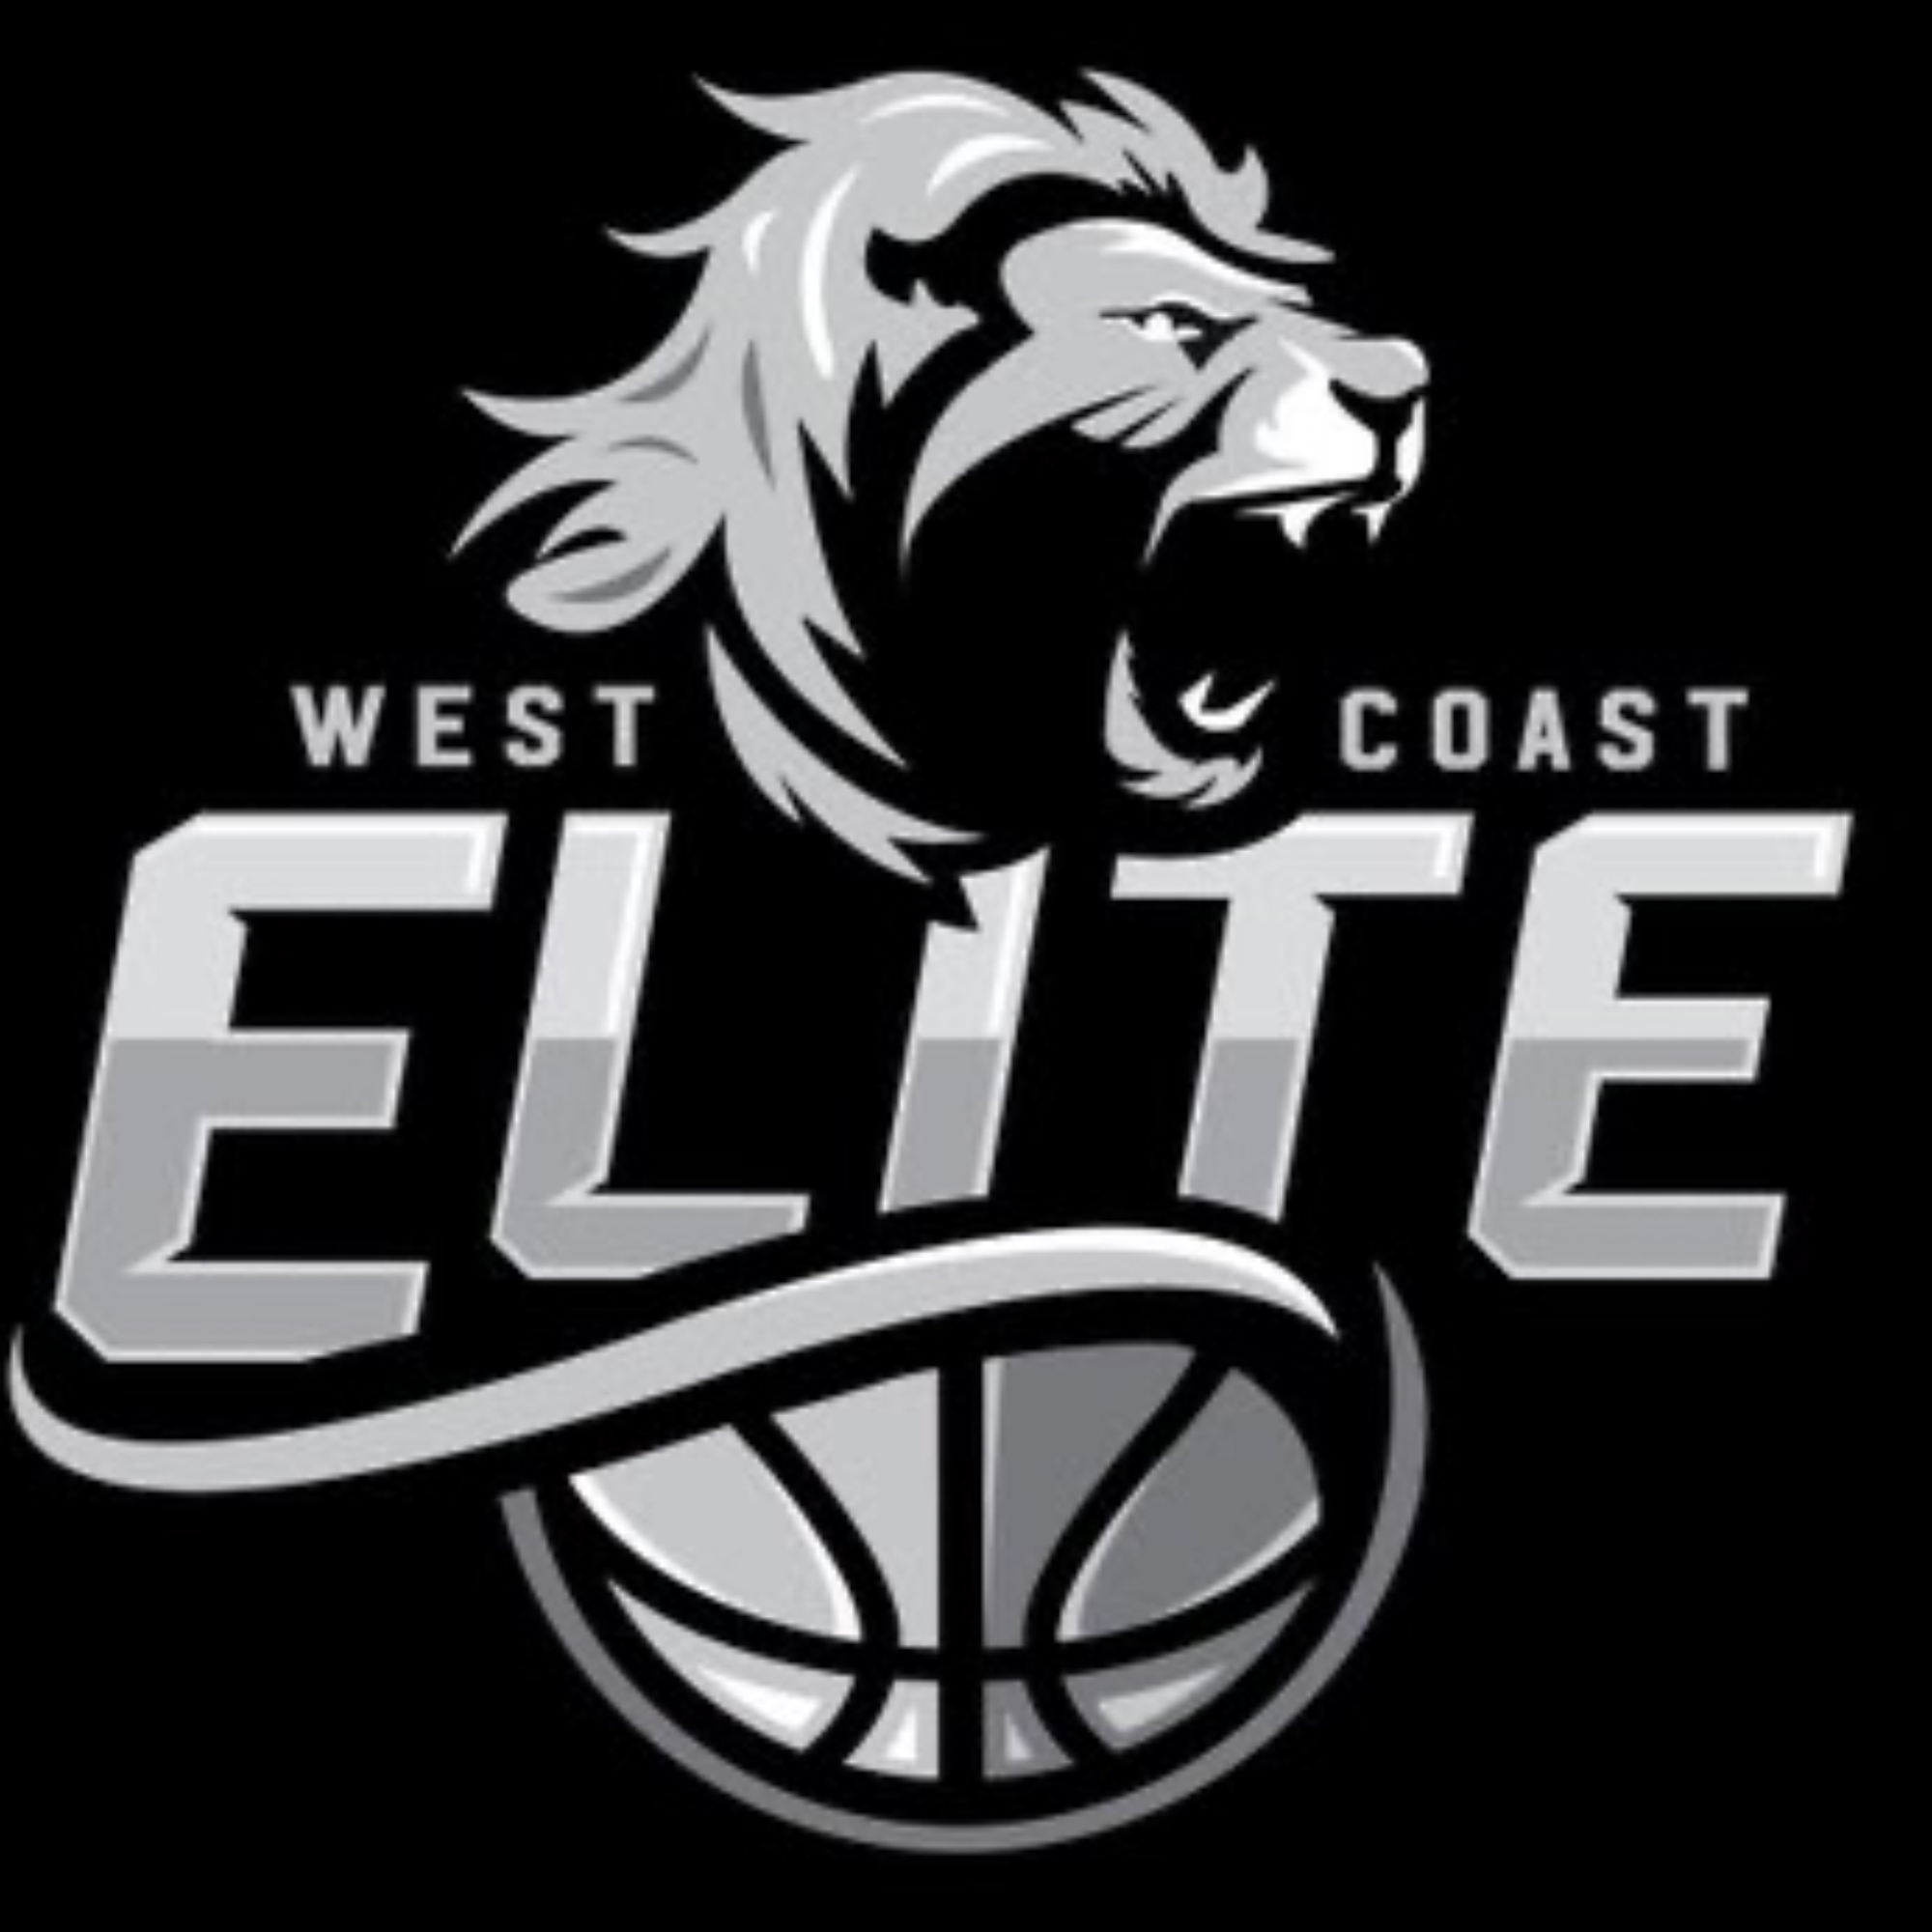 The official logo of West Coast Elite UA NorCal